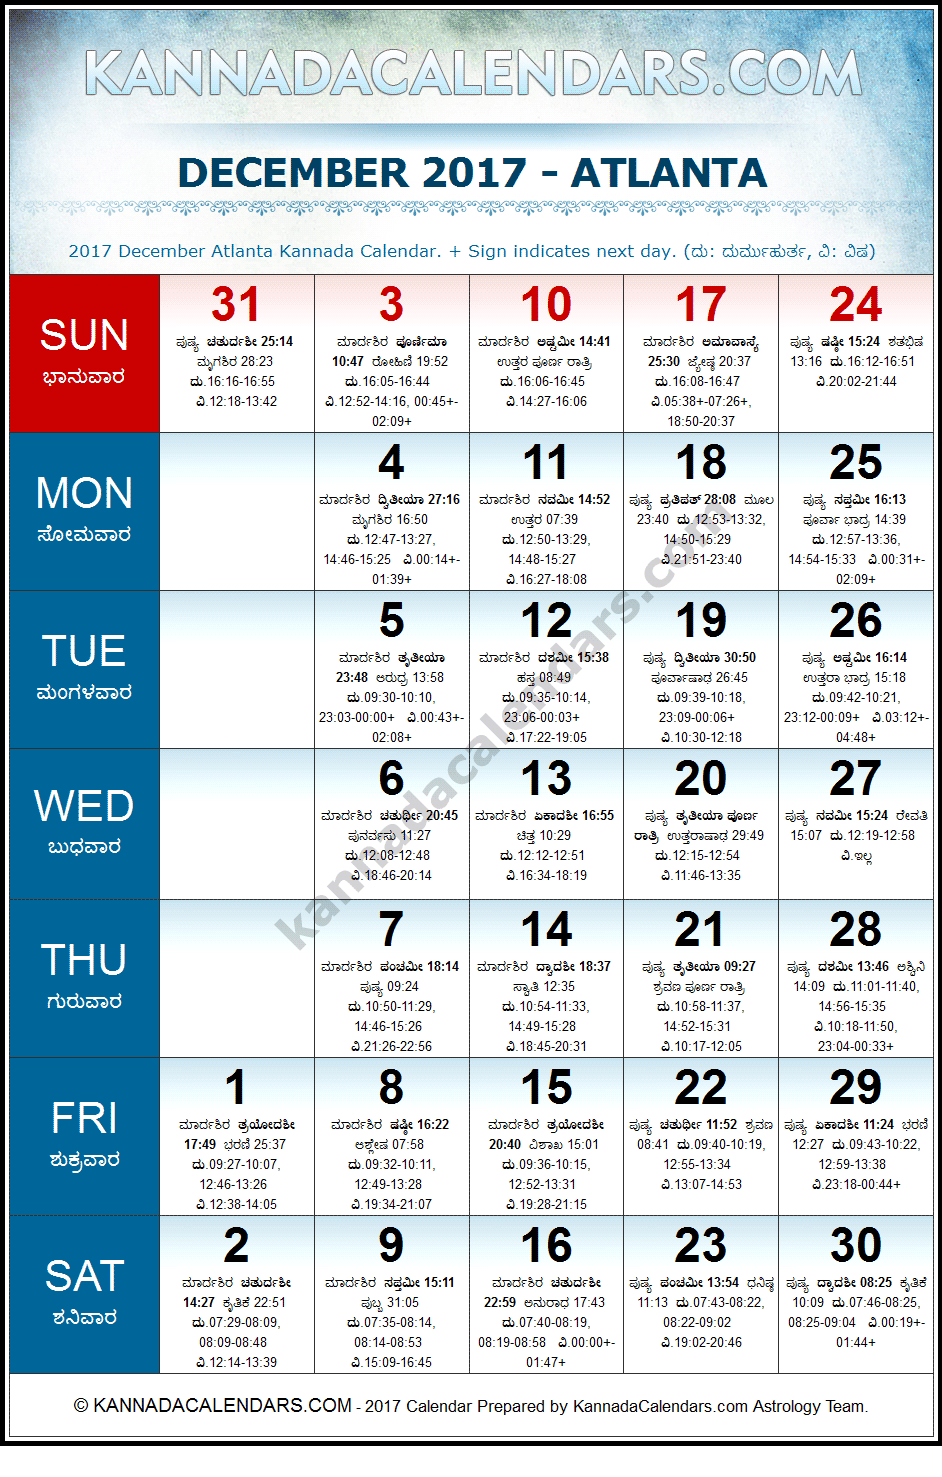 December 2017 Kannada Calendar for Atlanta, USA